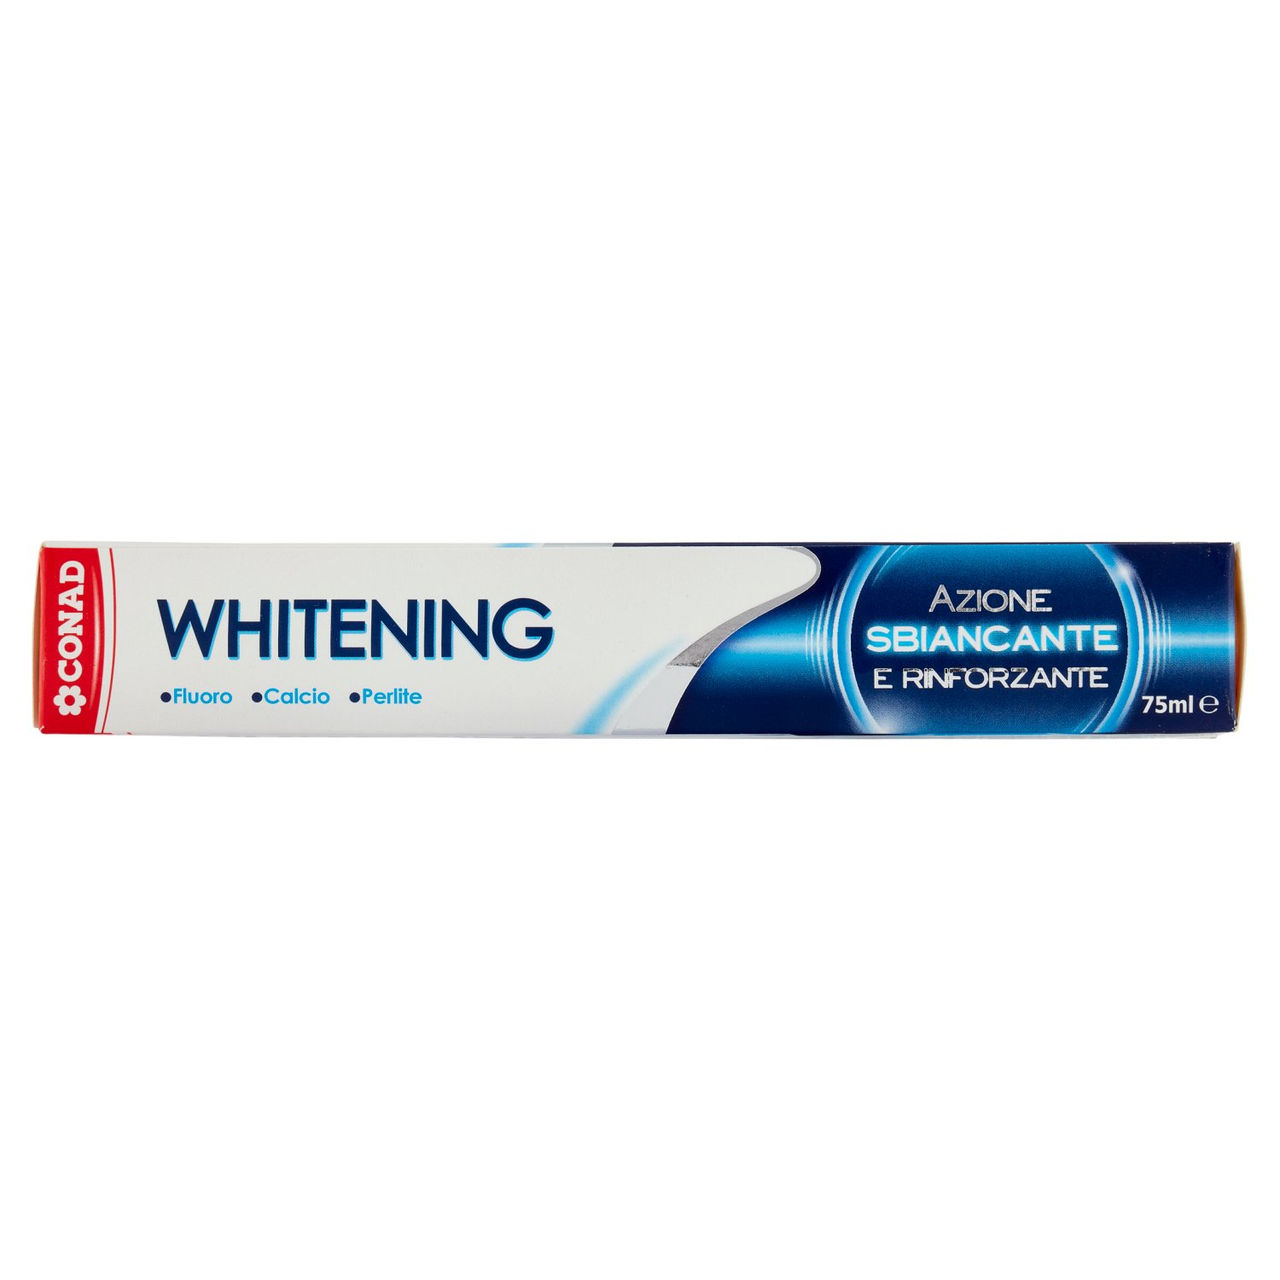 Dentifricio Whitening 75 ml Conad vendita online